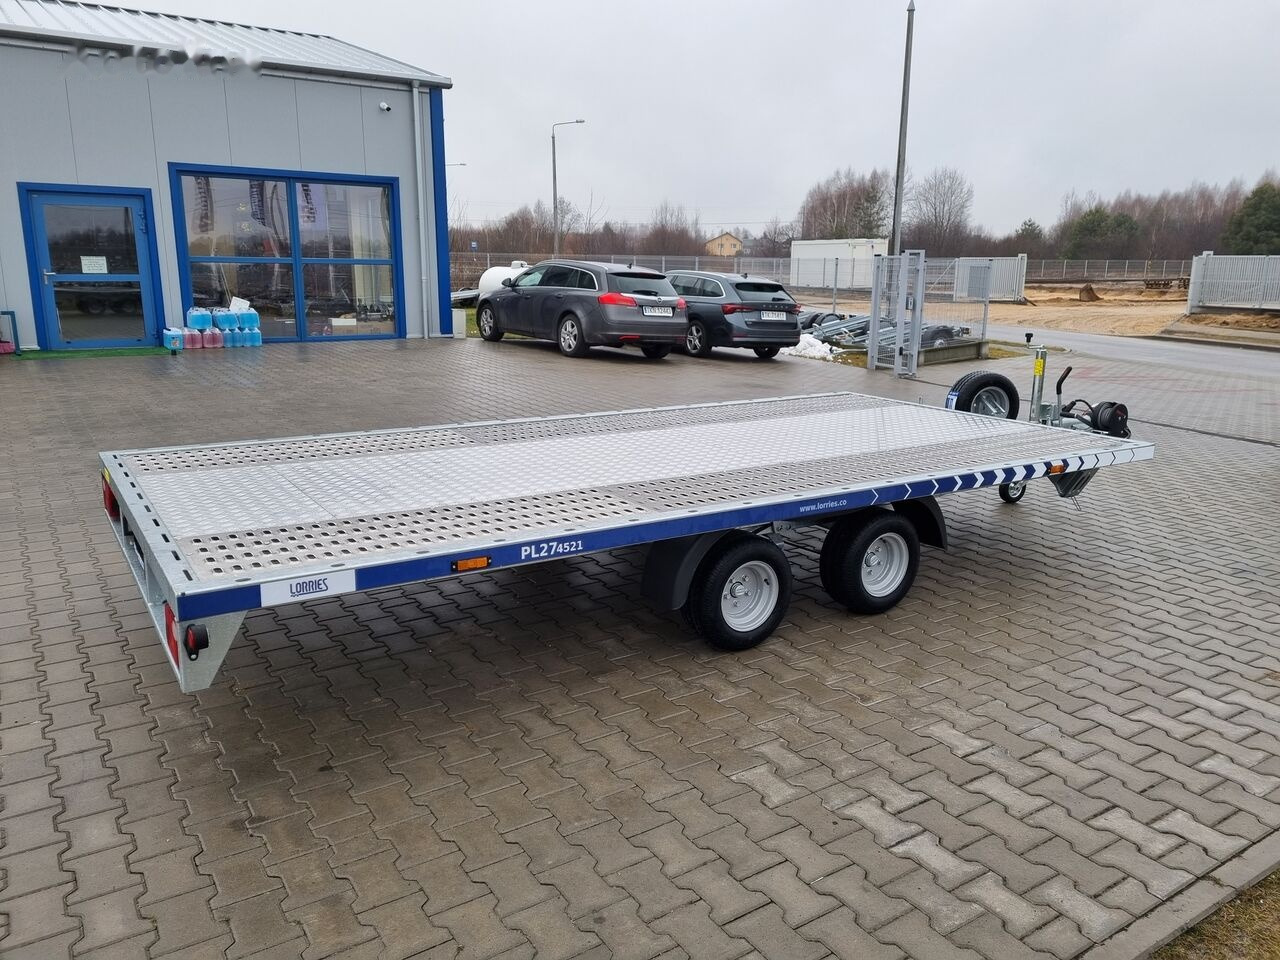 Remolque portavehículos nuevo Lorries PL-27 4521 car trailer 2.7t GVW tilting platform 441 x 200 cm: foto 11